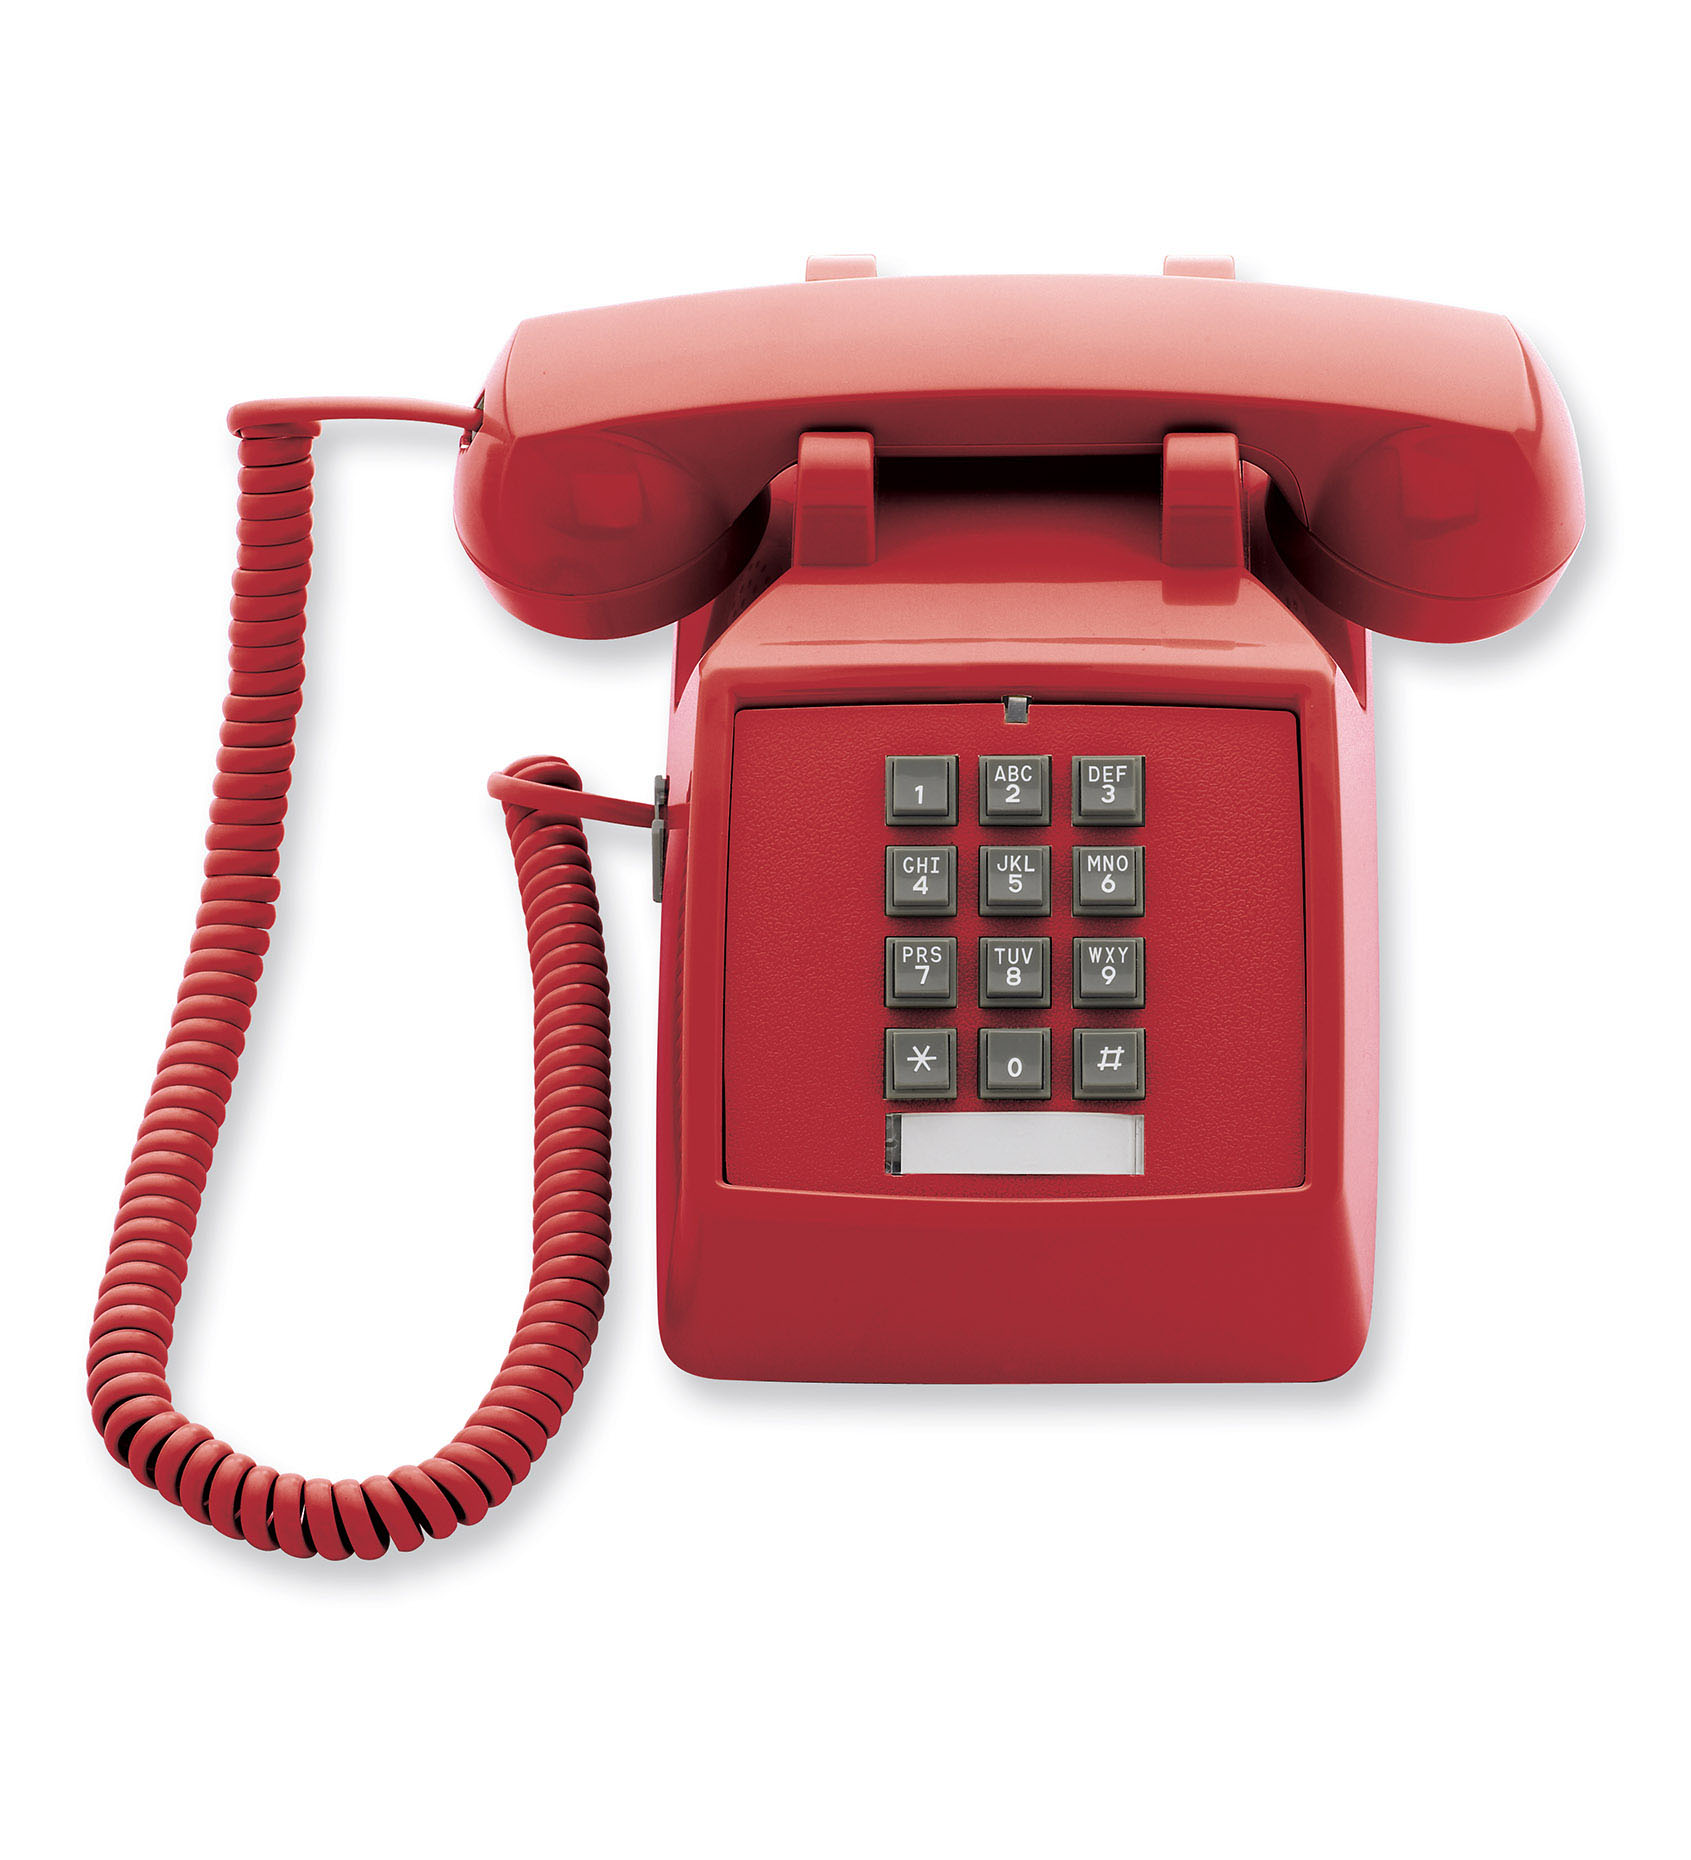 Scitec Emergency Series Phones